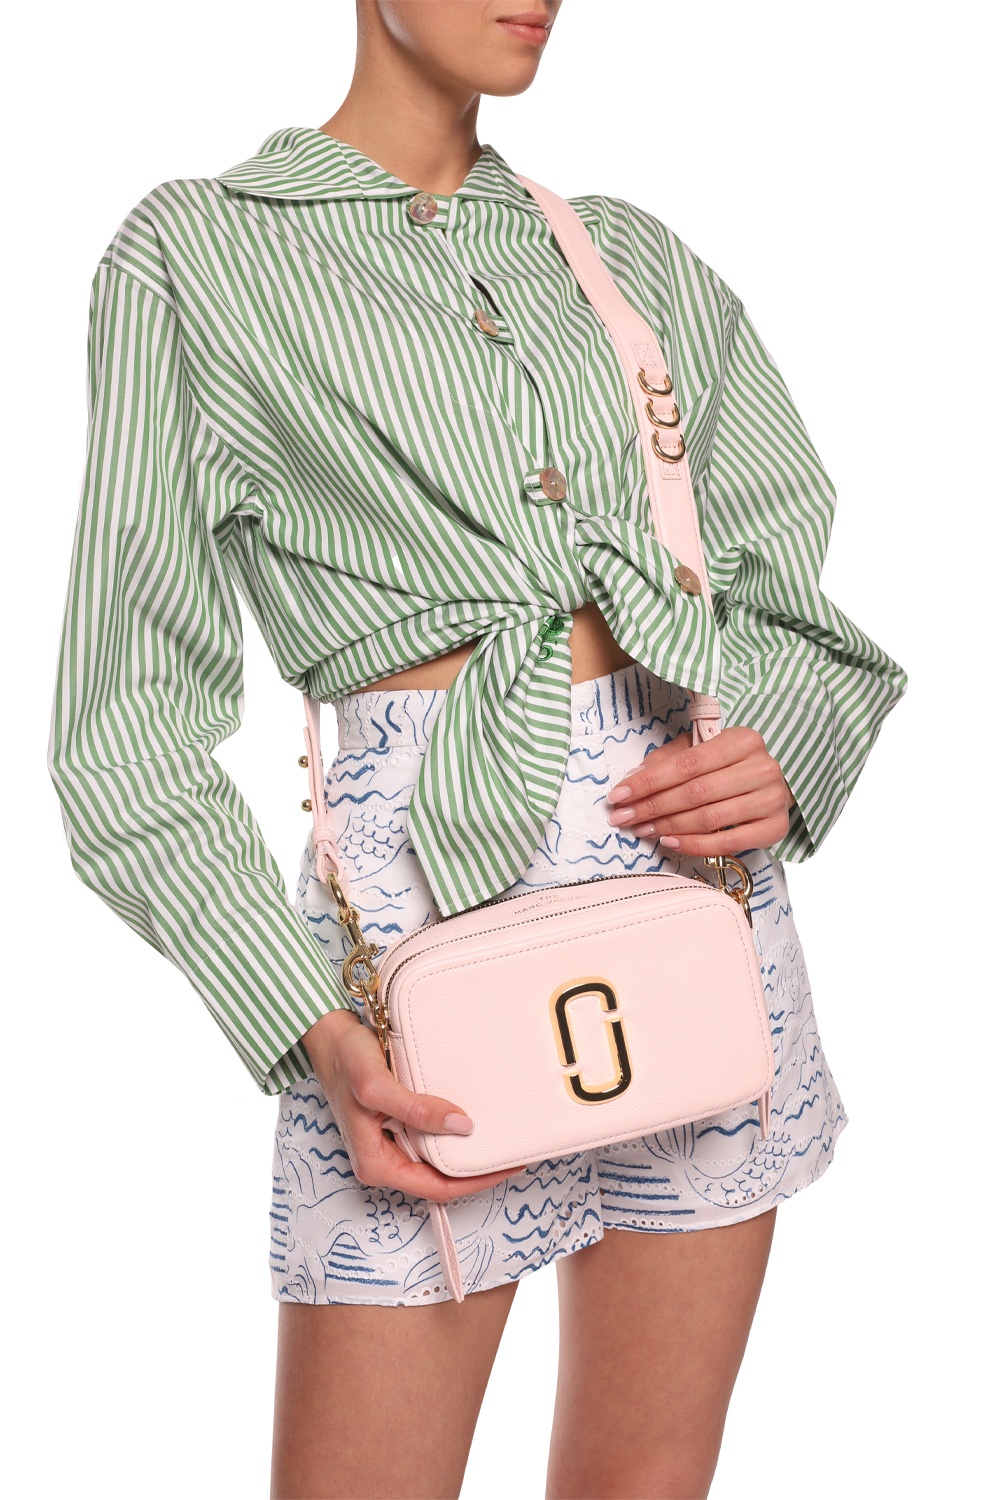 Marc Jacobs Softshot 21 Crossbidy Bag, Cream M0014591 